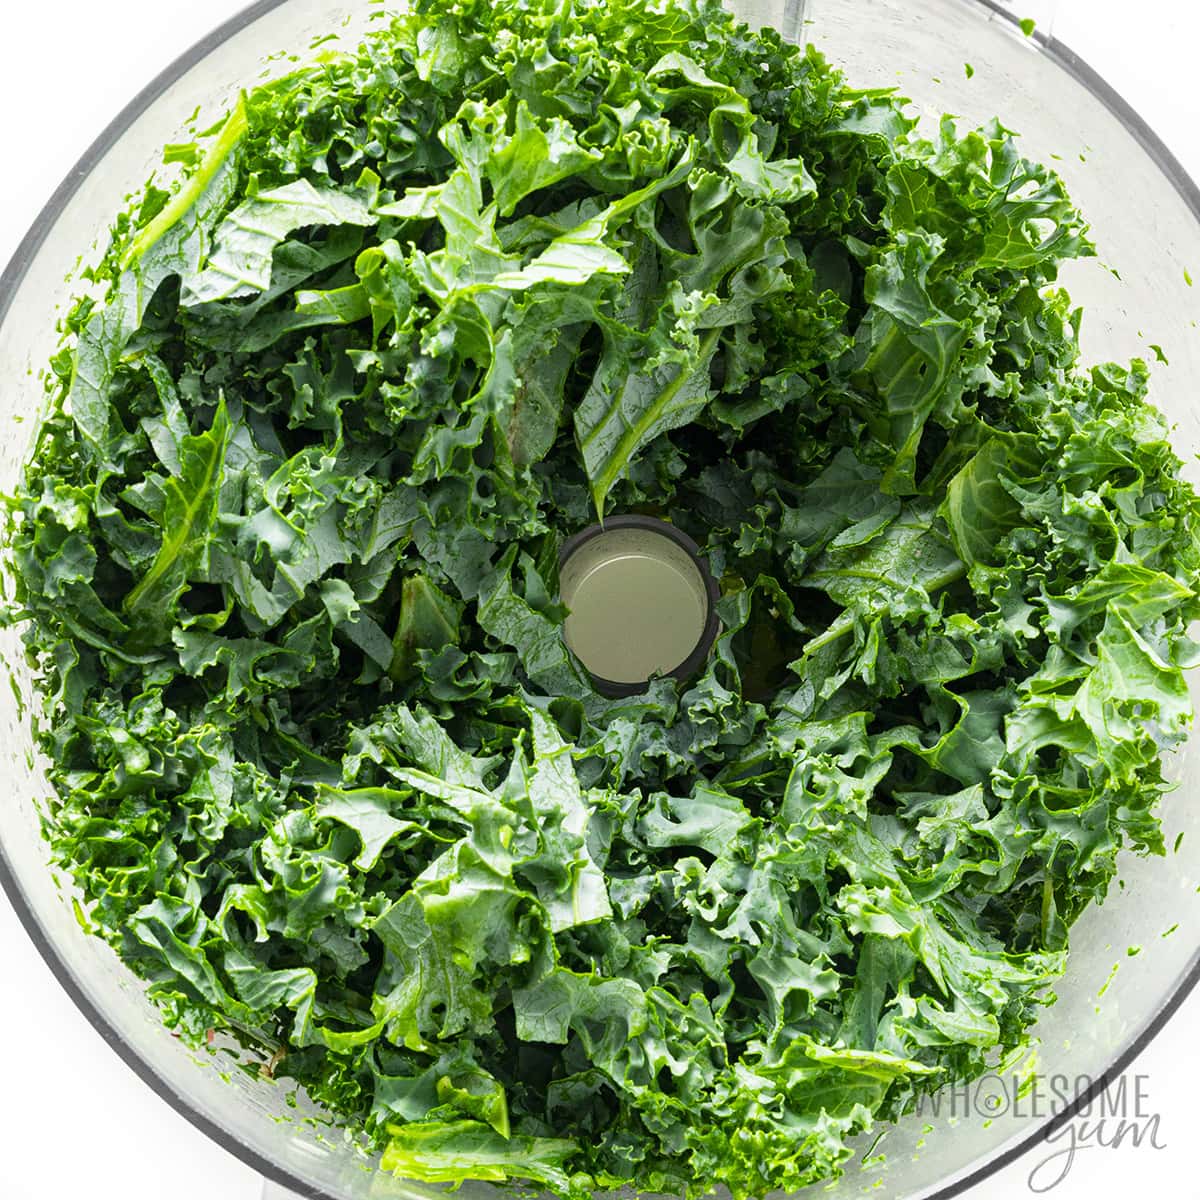 Shredded kale in a food processor.